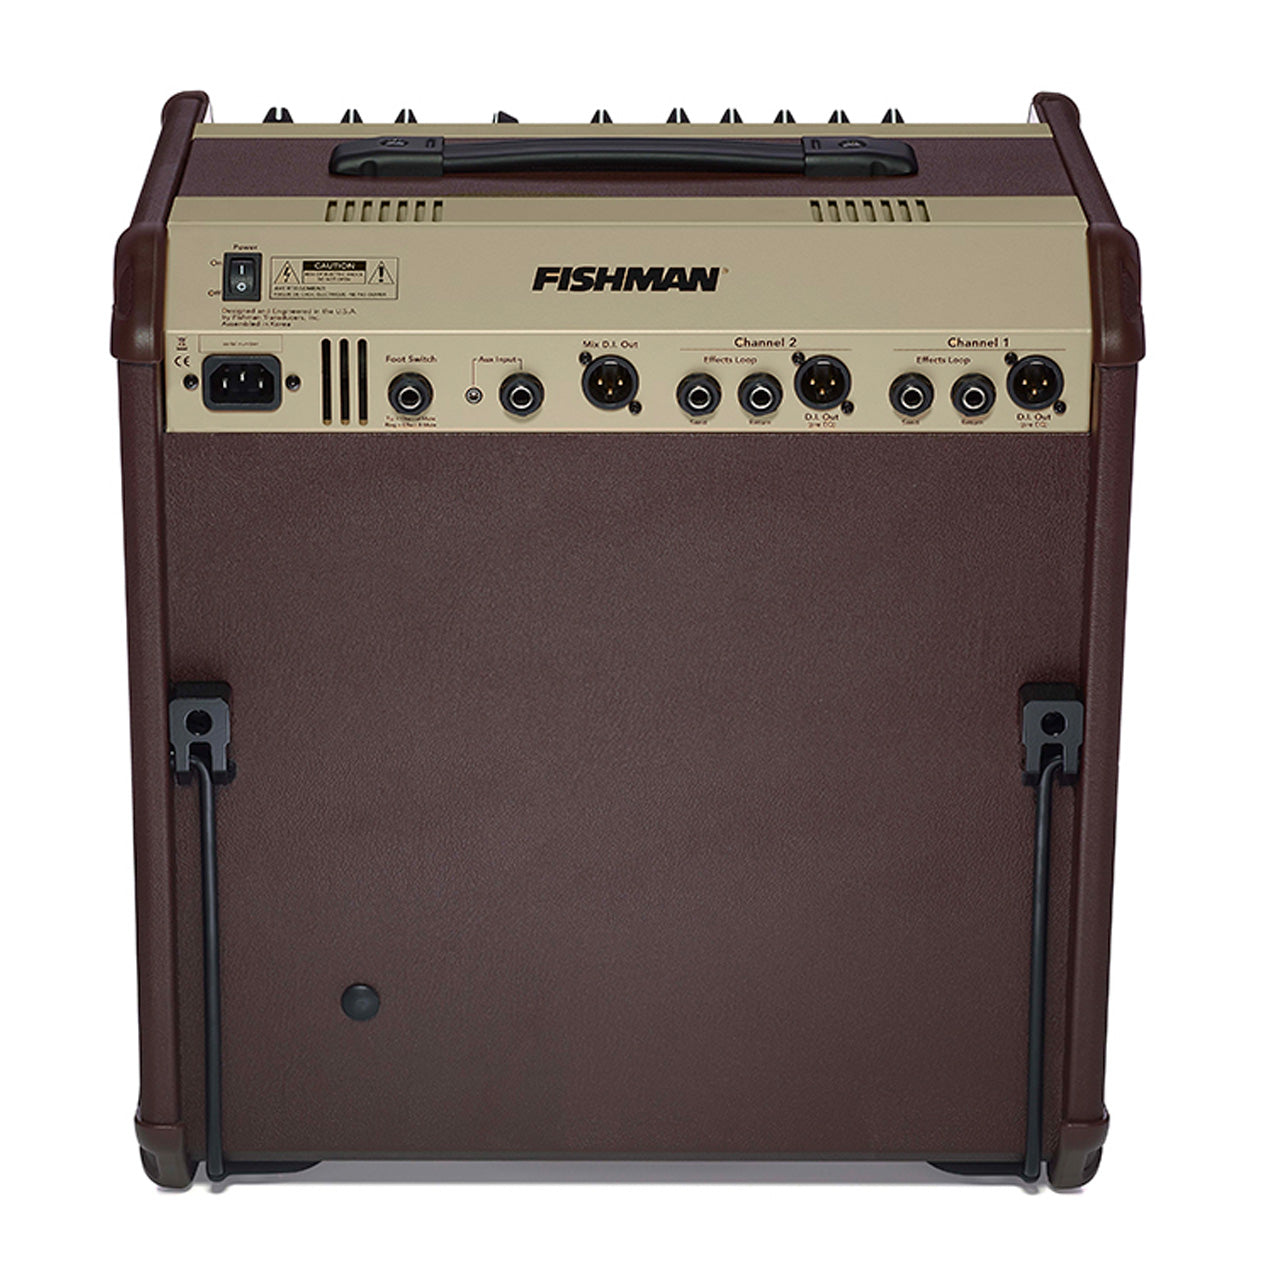 Fishman Loudbox Performer Amplifier PRO-LBX-700, back